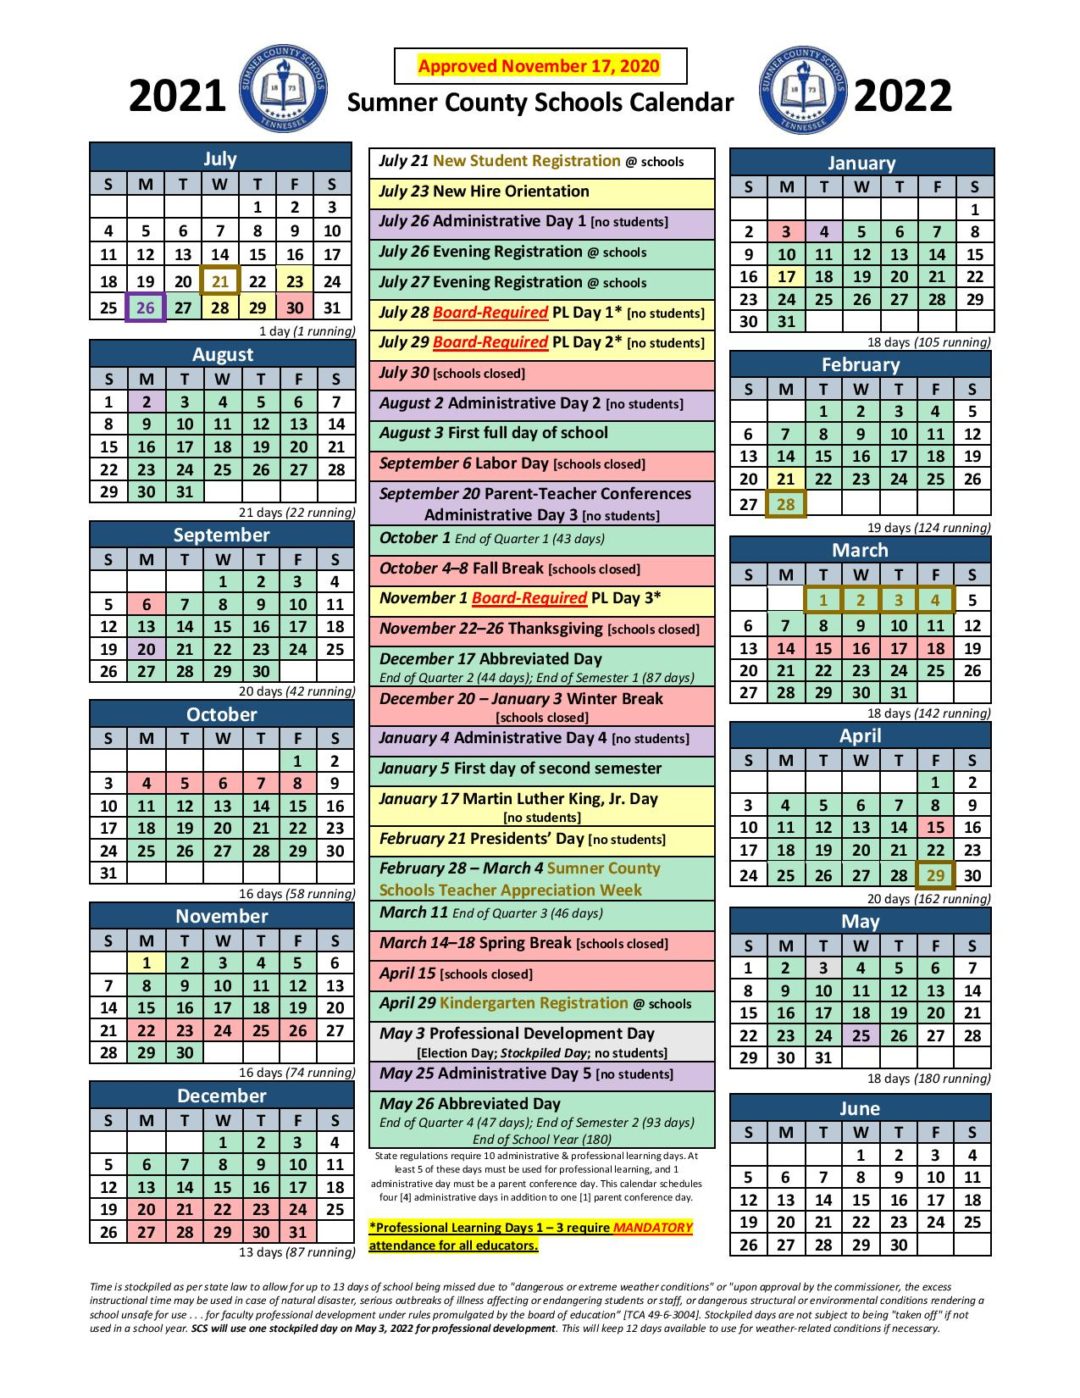 Sumner County School Calendar Holidays 2021 2022 | Free Hot Nude Porn